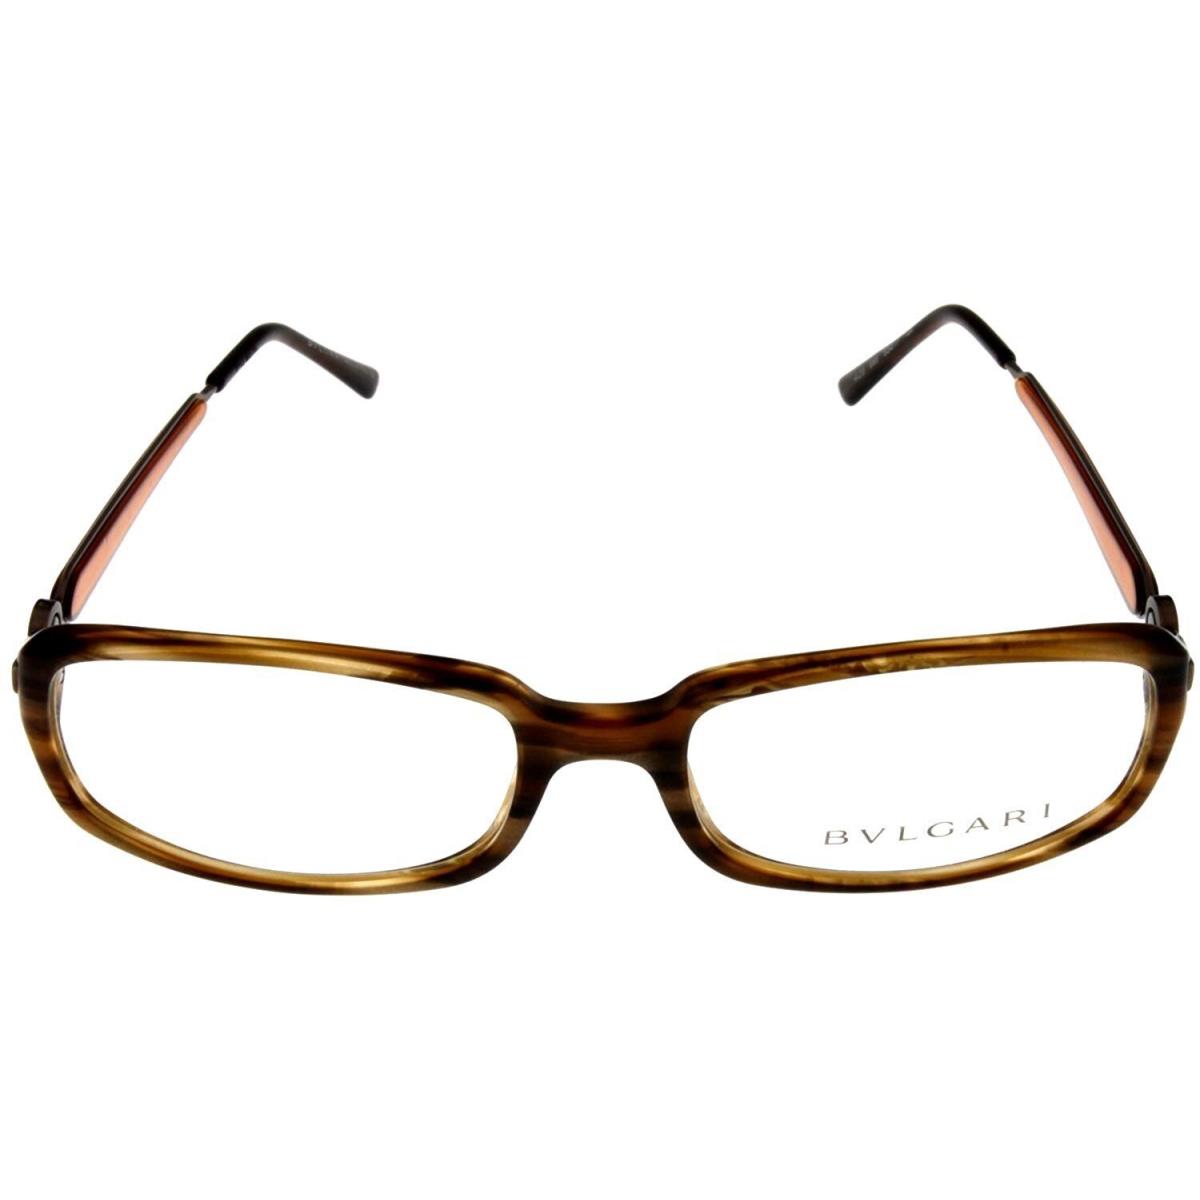 Bvlgari Eyeglasses Frame Unisex Brown Havana Fashion Rectangular BV429 685